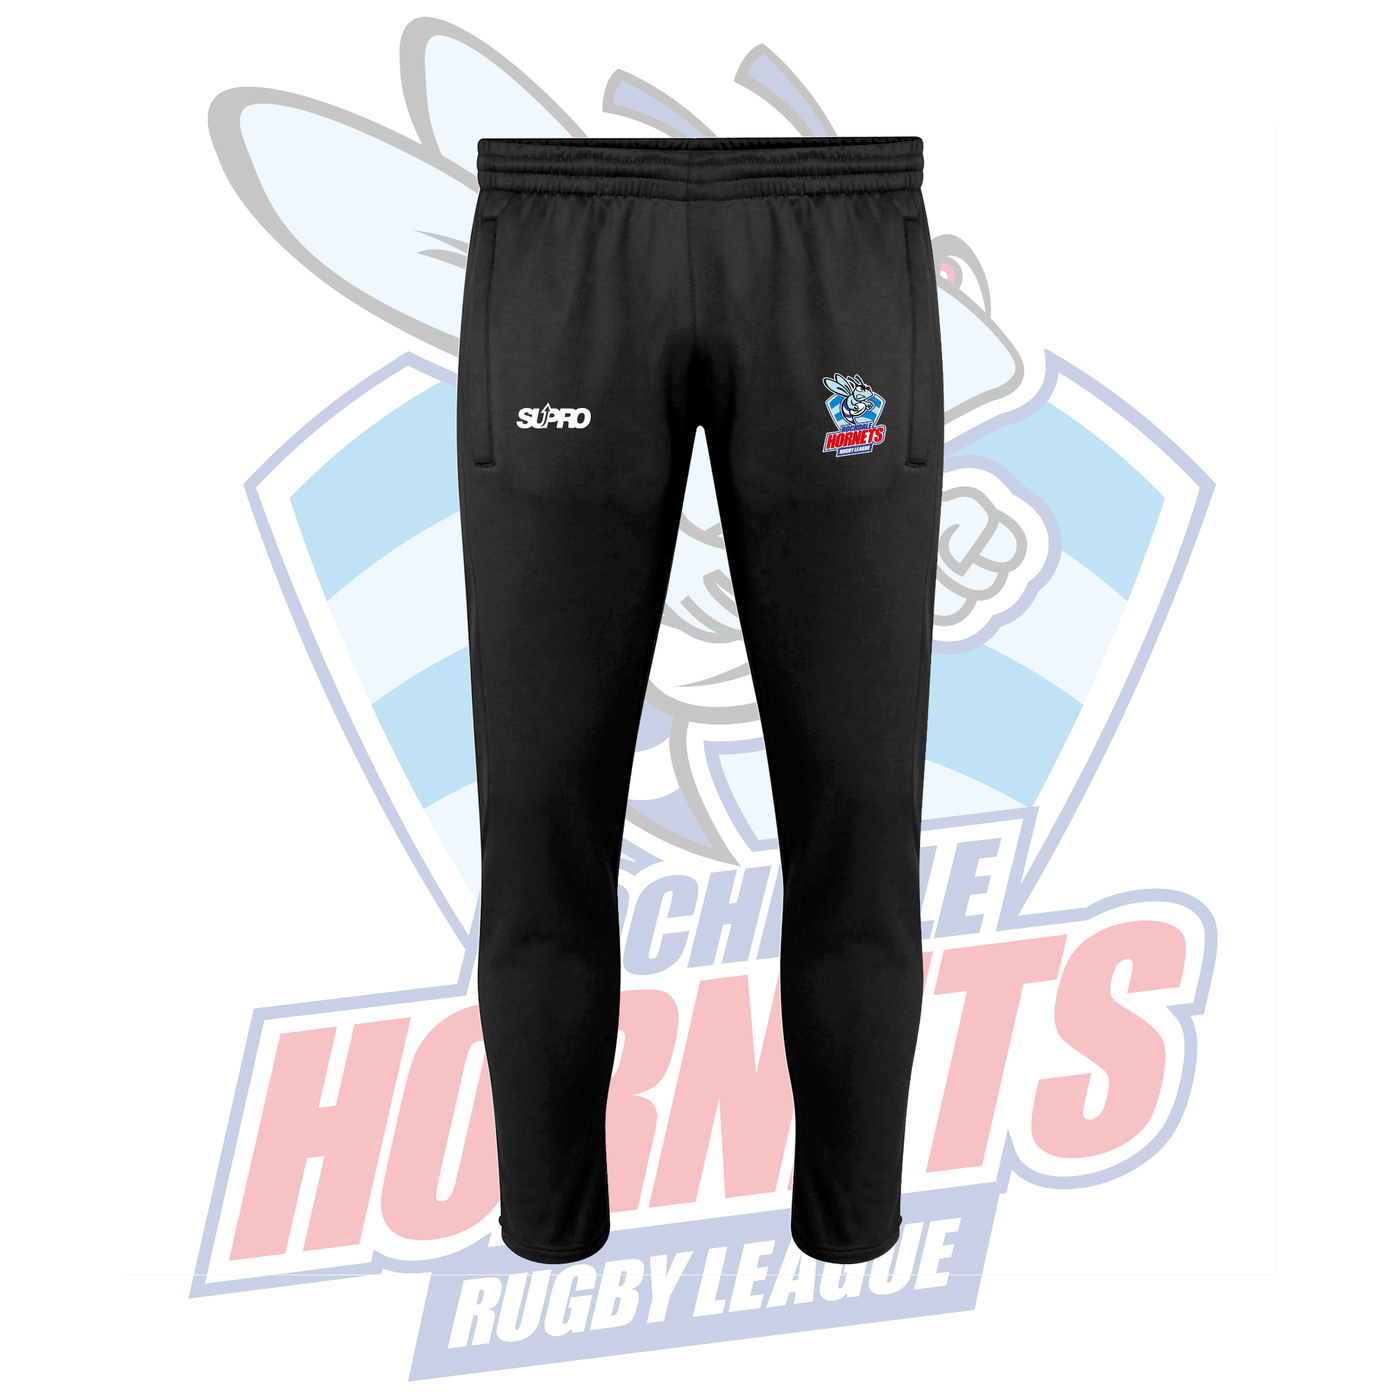 Rochdale Hornets Skinny Pants - Community offer